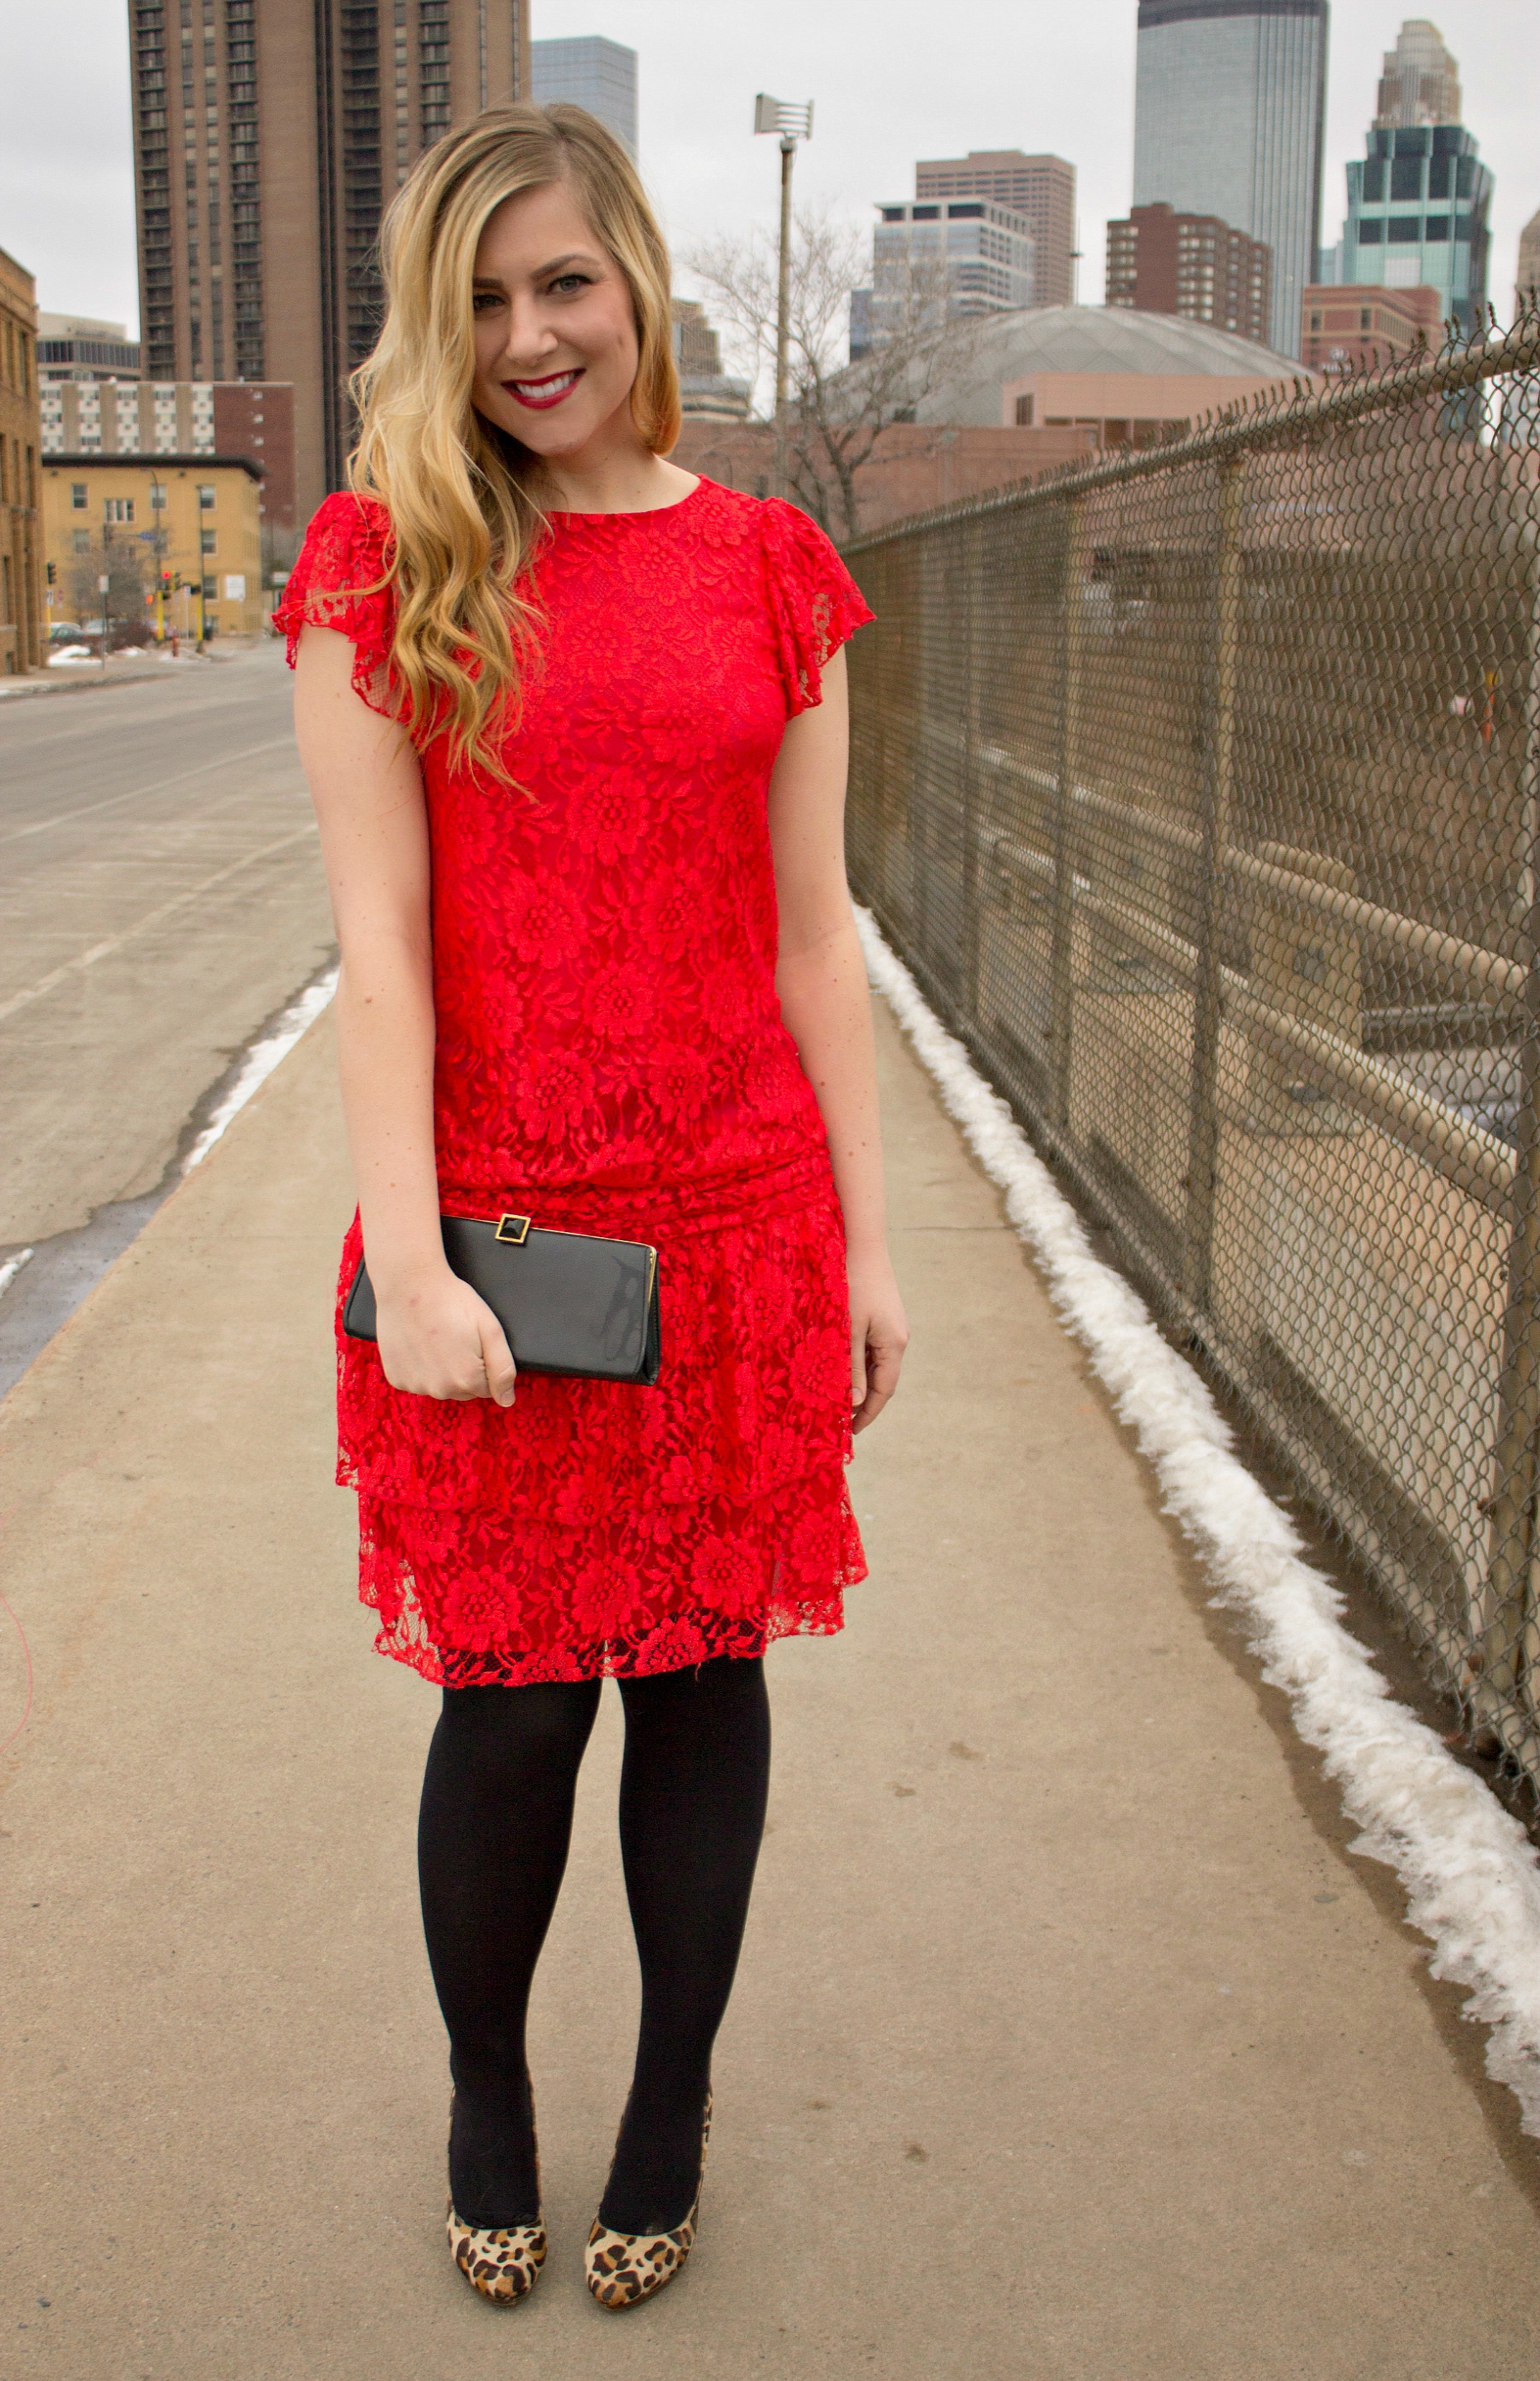 http://rachelslookbook.com/wp-content/uploads/2015/02/red-lace-dress-leopard-heels.jpg